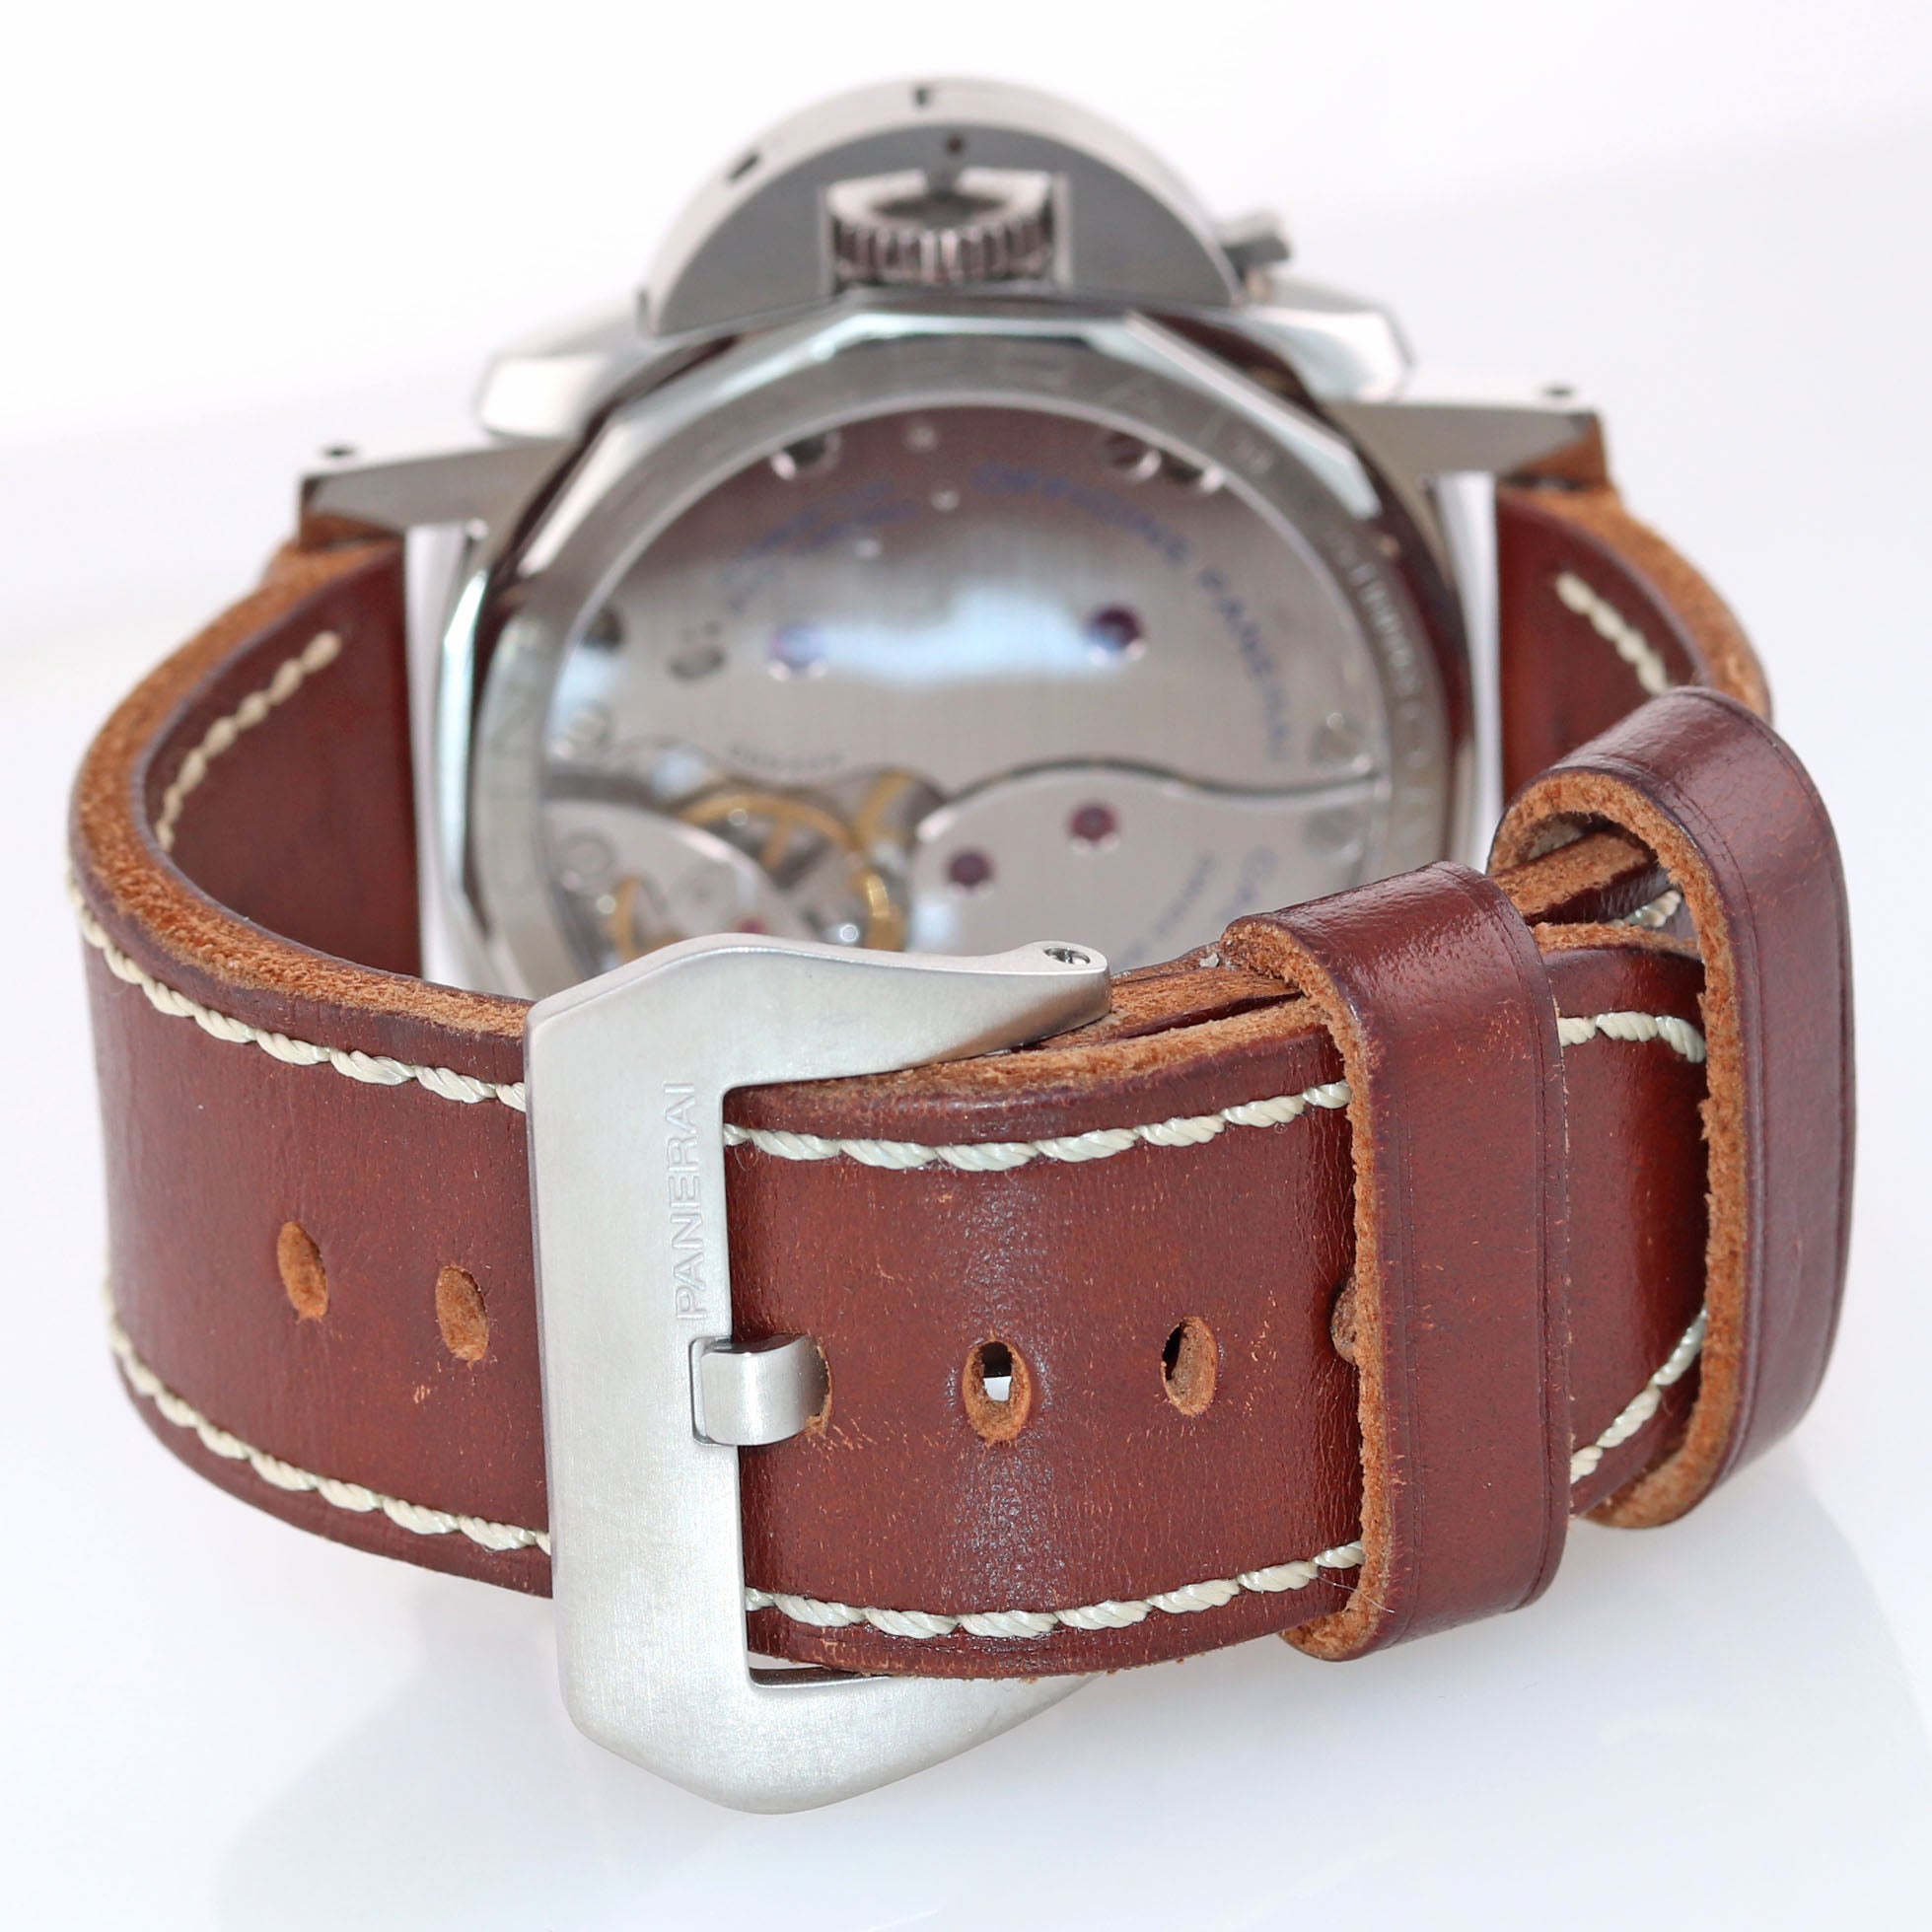 MINT COMPLETE Panerai PAM 372 Luminor 3 Day Steel 47mm N 1950 Manual Wind Watch